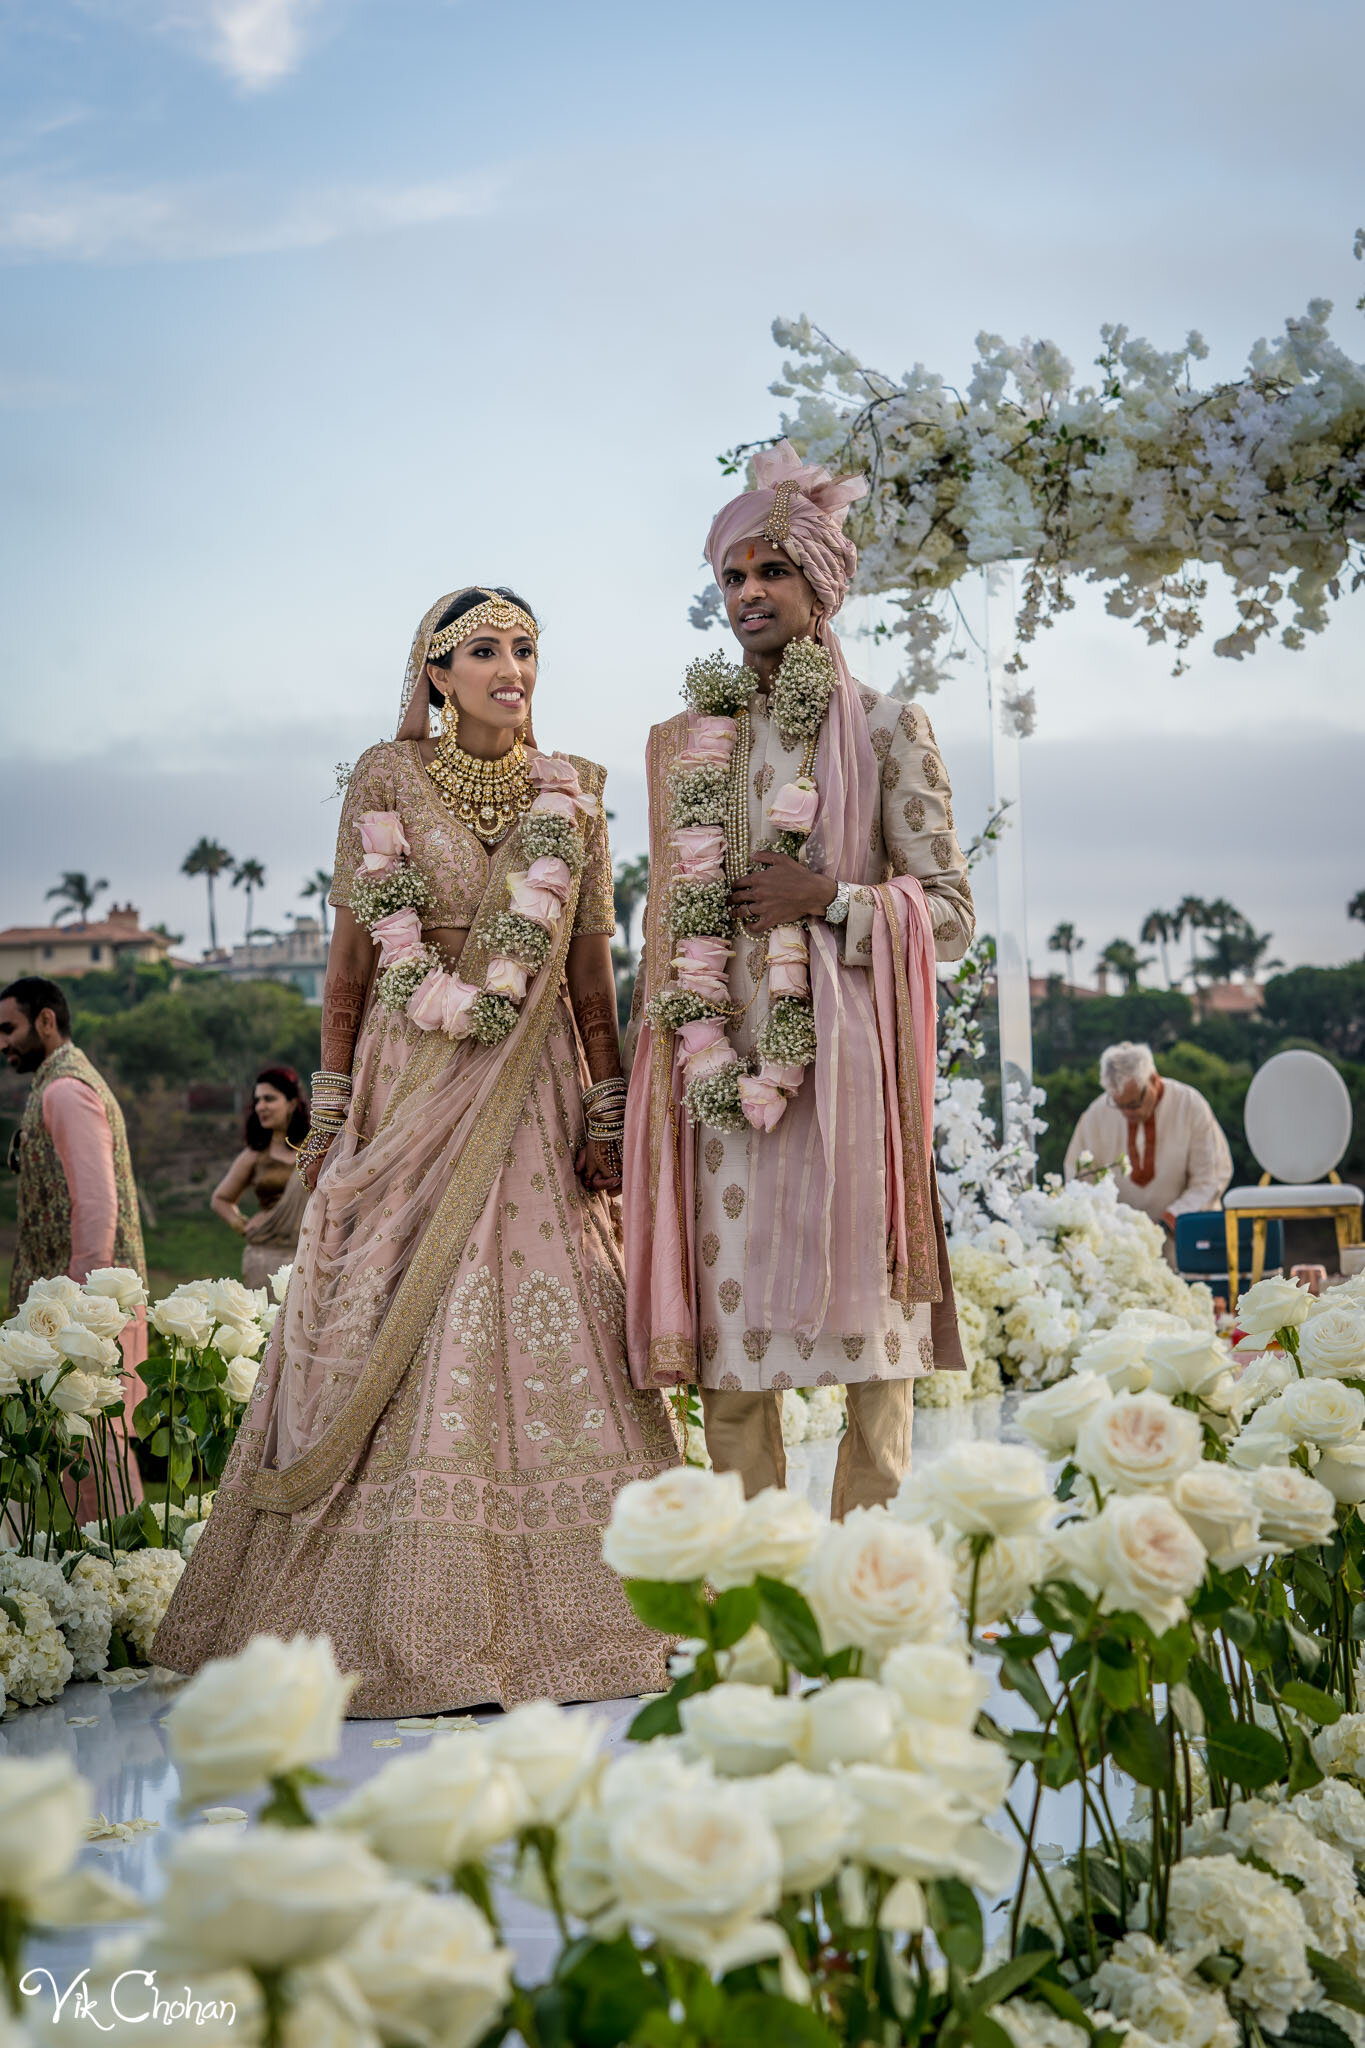 2021-07-30-Shaan-&-Megha-Wedding-Vik-Chohan-Photography-Photo-Booth-Social-Media-VCP-384.jpg